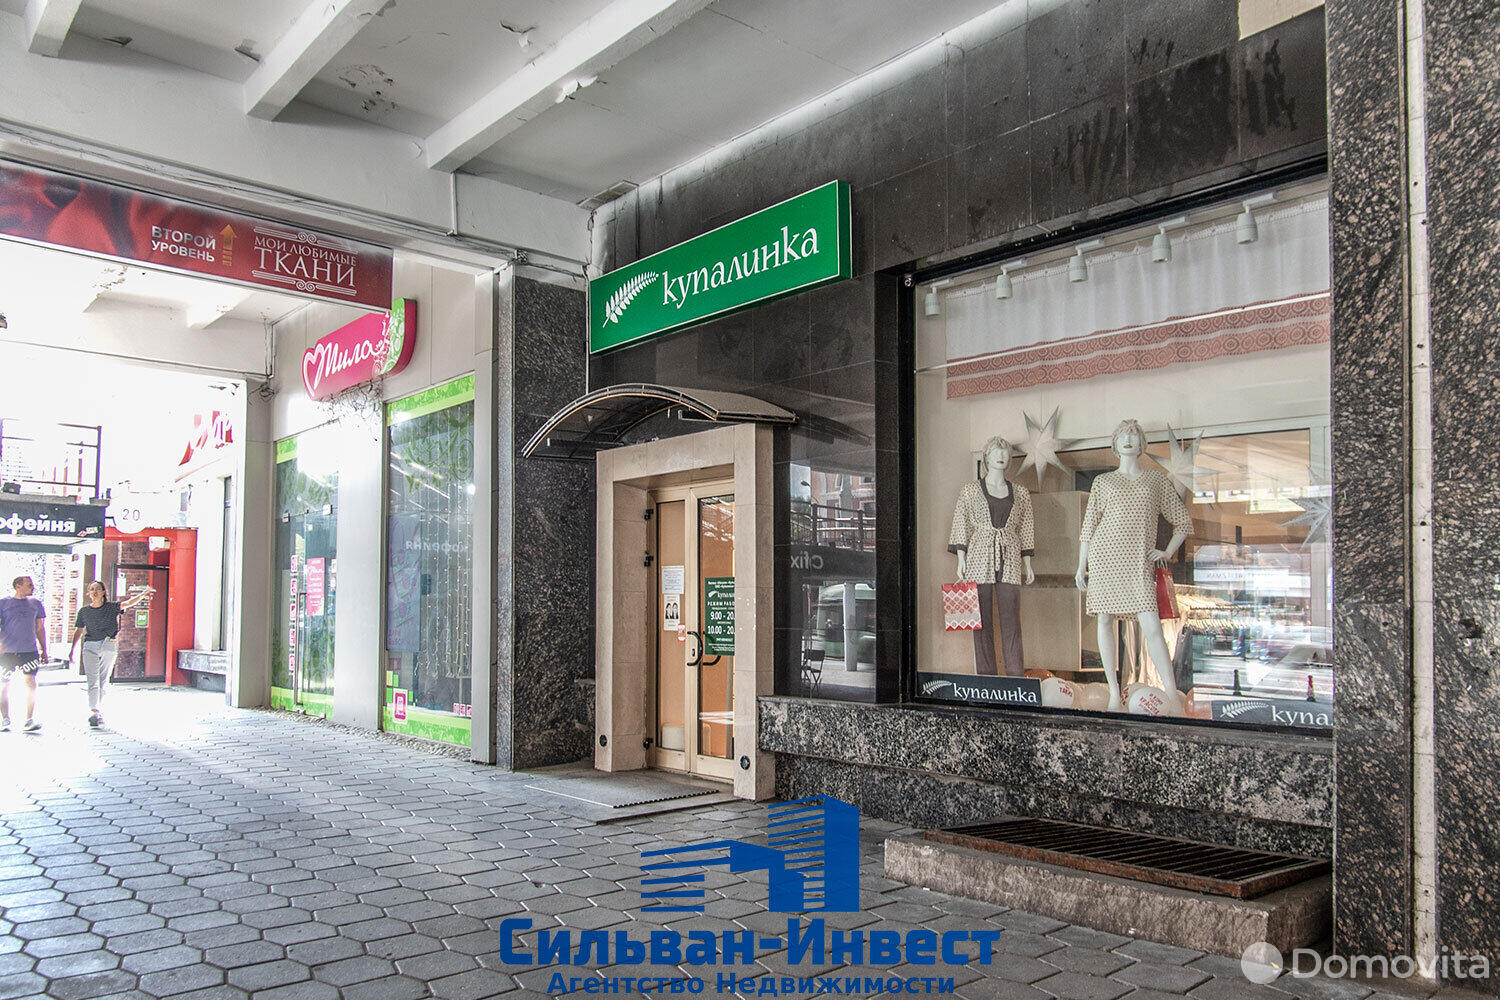 Аренда торговой точки на ул. Немига, д. 12/А в Минске, 5025EUR - фото 1